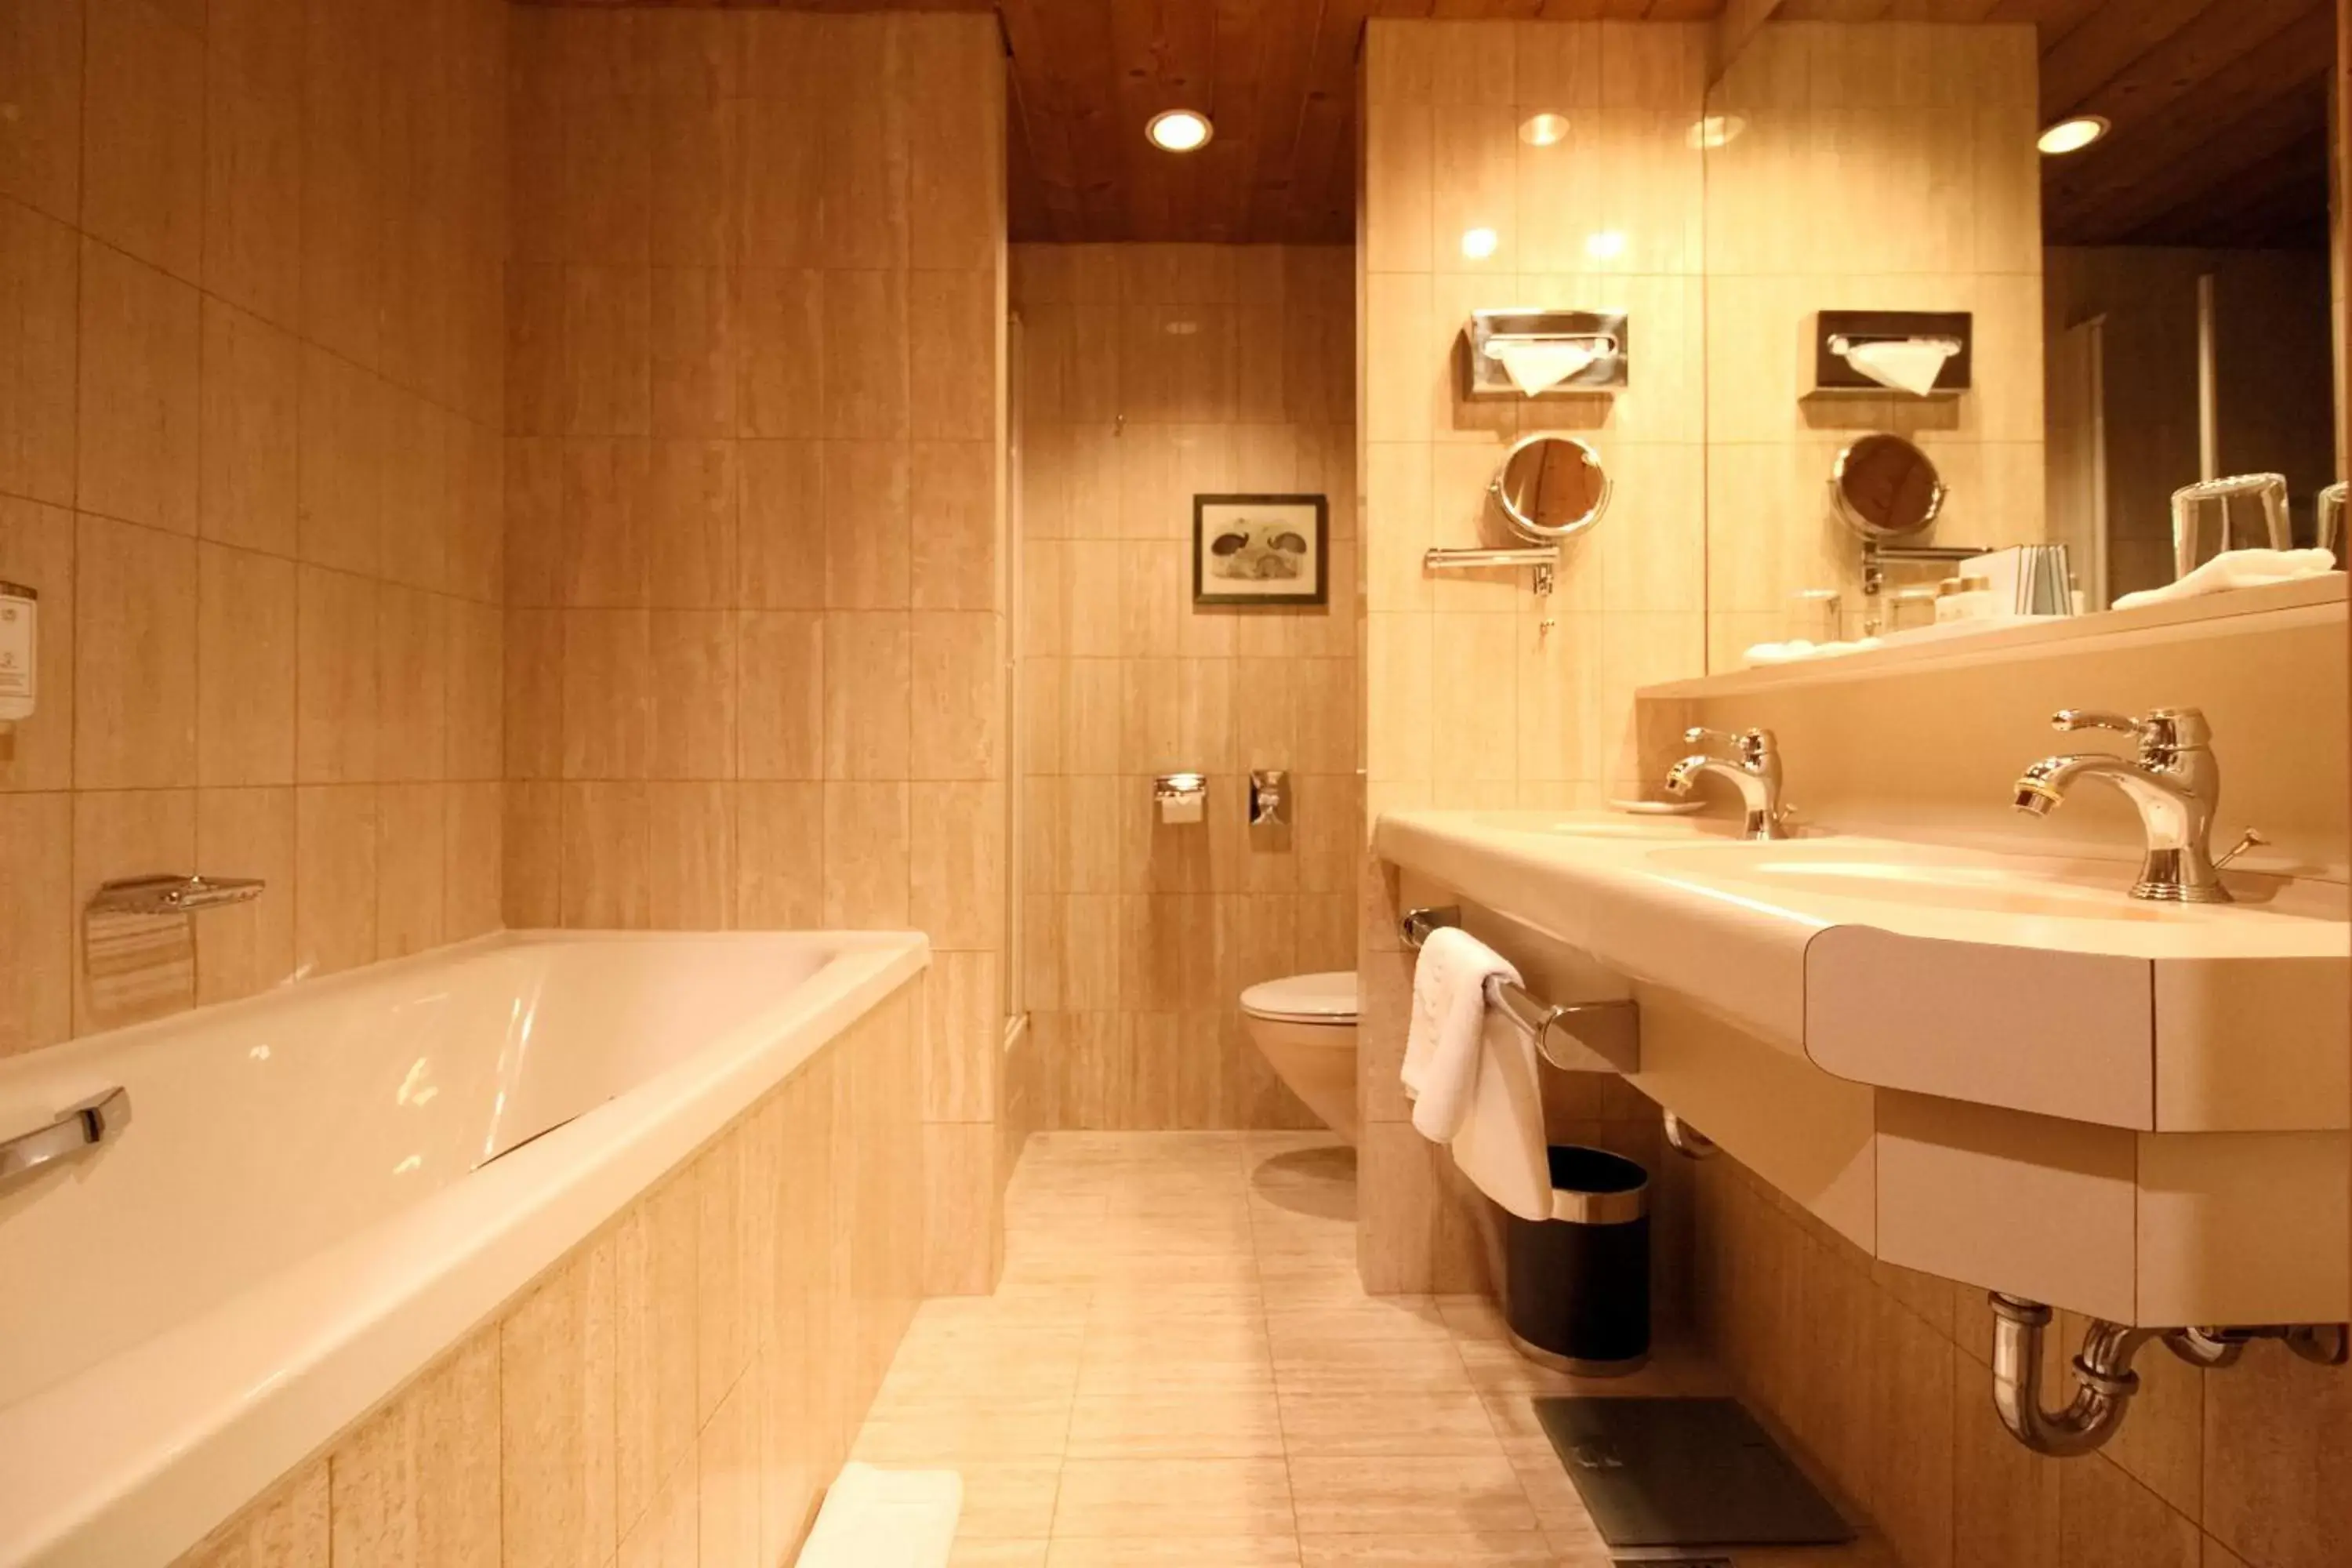 Bathroom in Reindl's Partenkirchener Hof